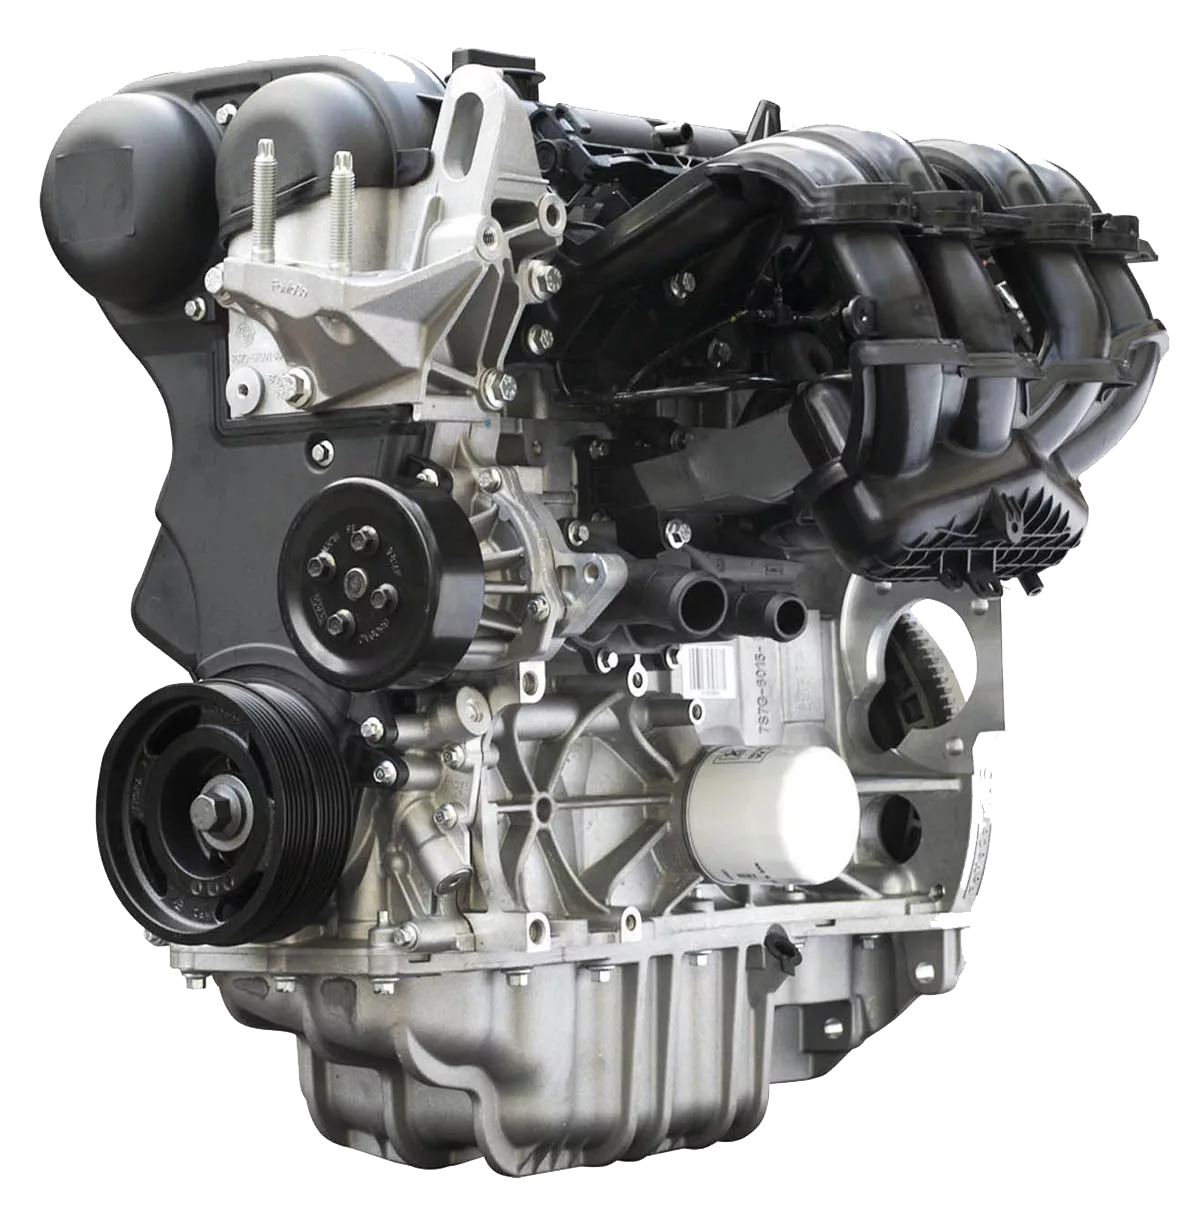 Двигатель сигма. Двигатель Форд фокус 1.6 Duratec. Duratec 1.6 ti-VCT 115 Л.С. Двигатель Форд фокус 1 1.6. Мотор Форд фокус 2 1.6 100 л.с.